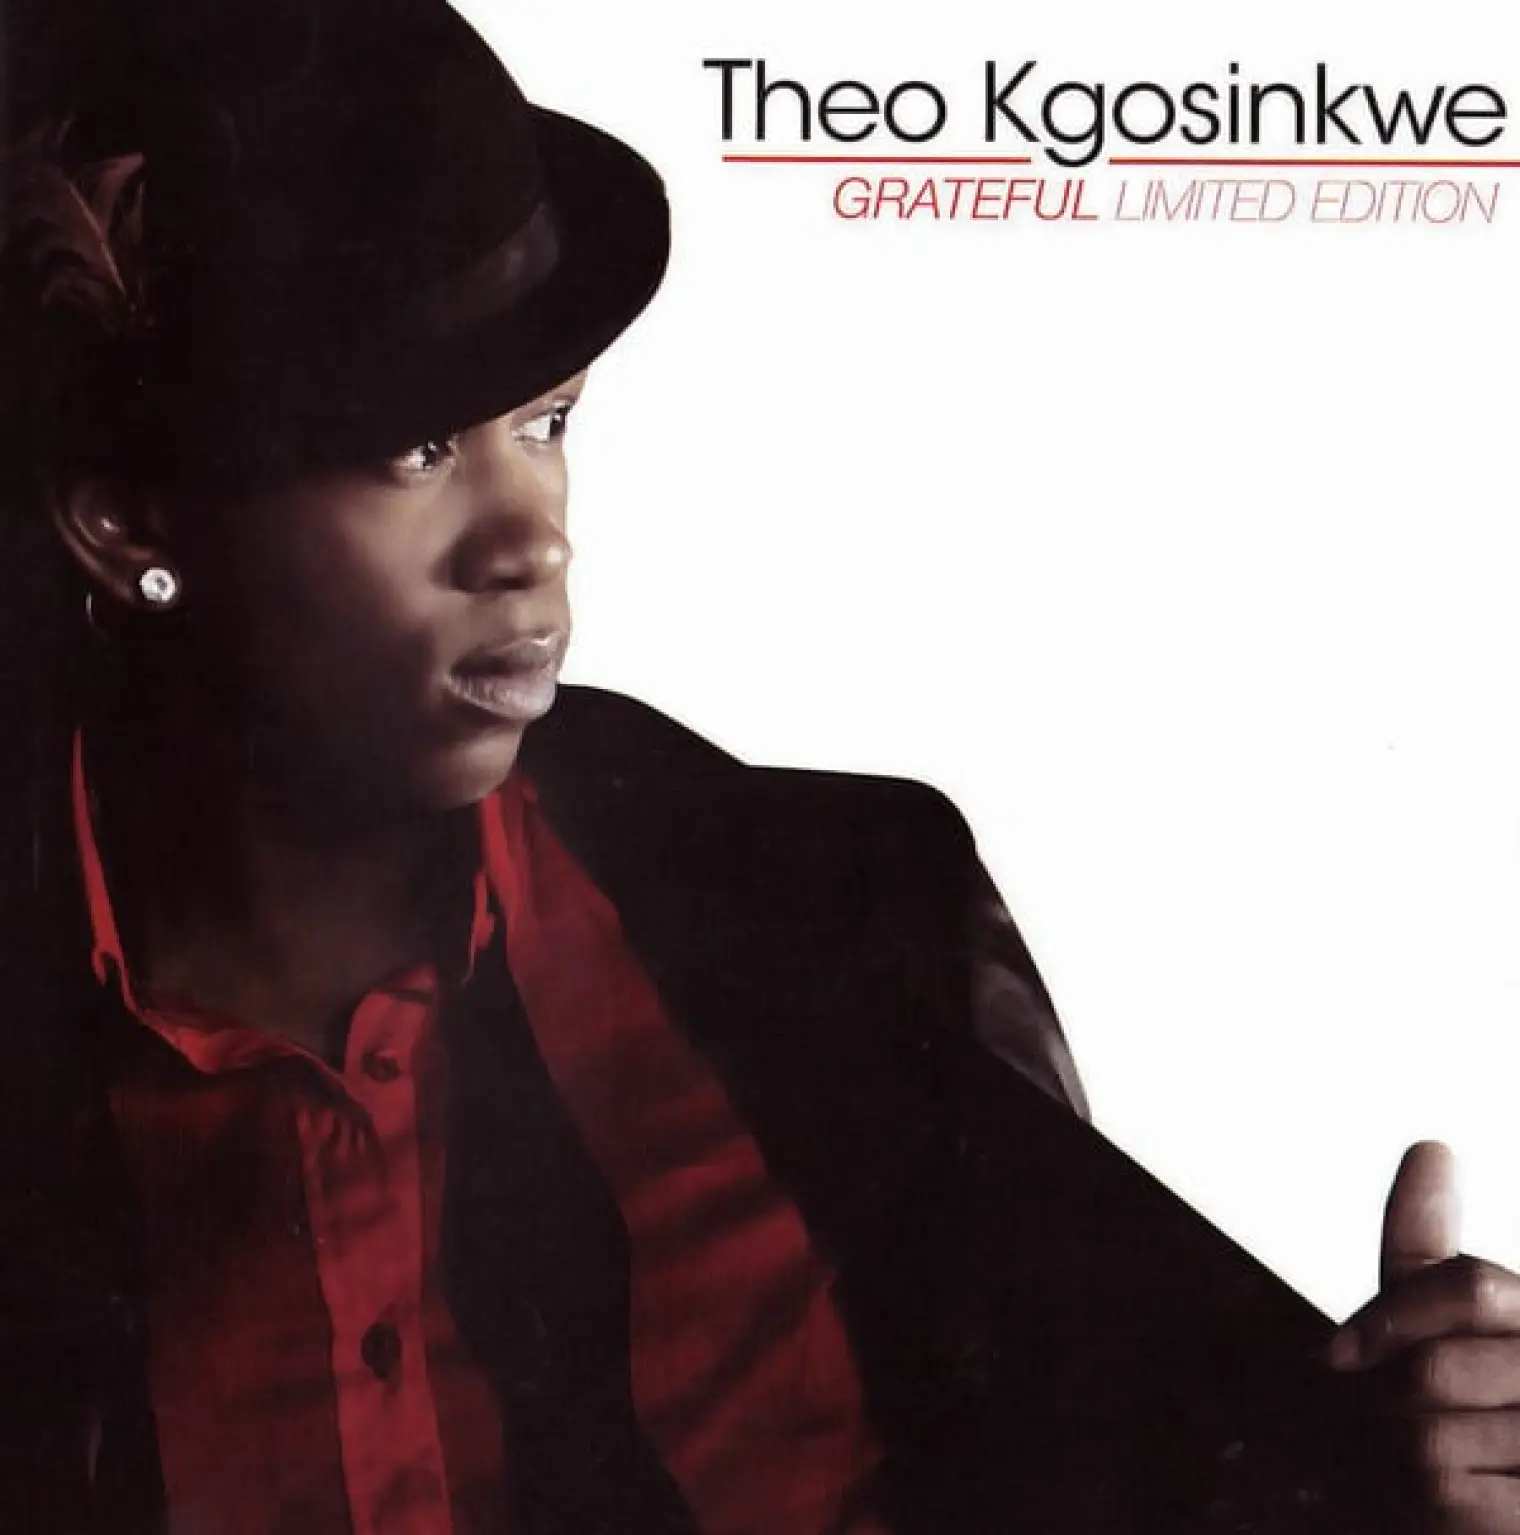 Grateful (Limited Edition) -  Theo Kgosinkwe 